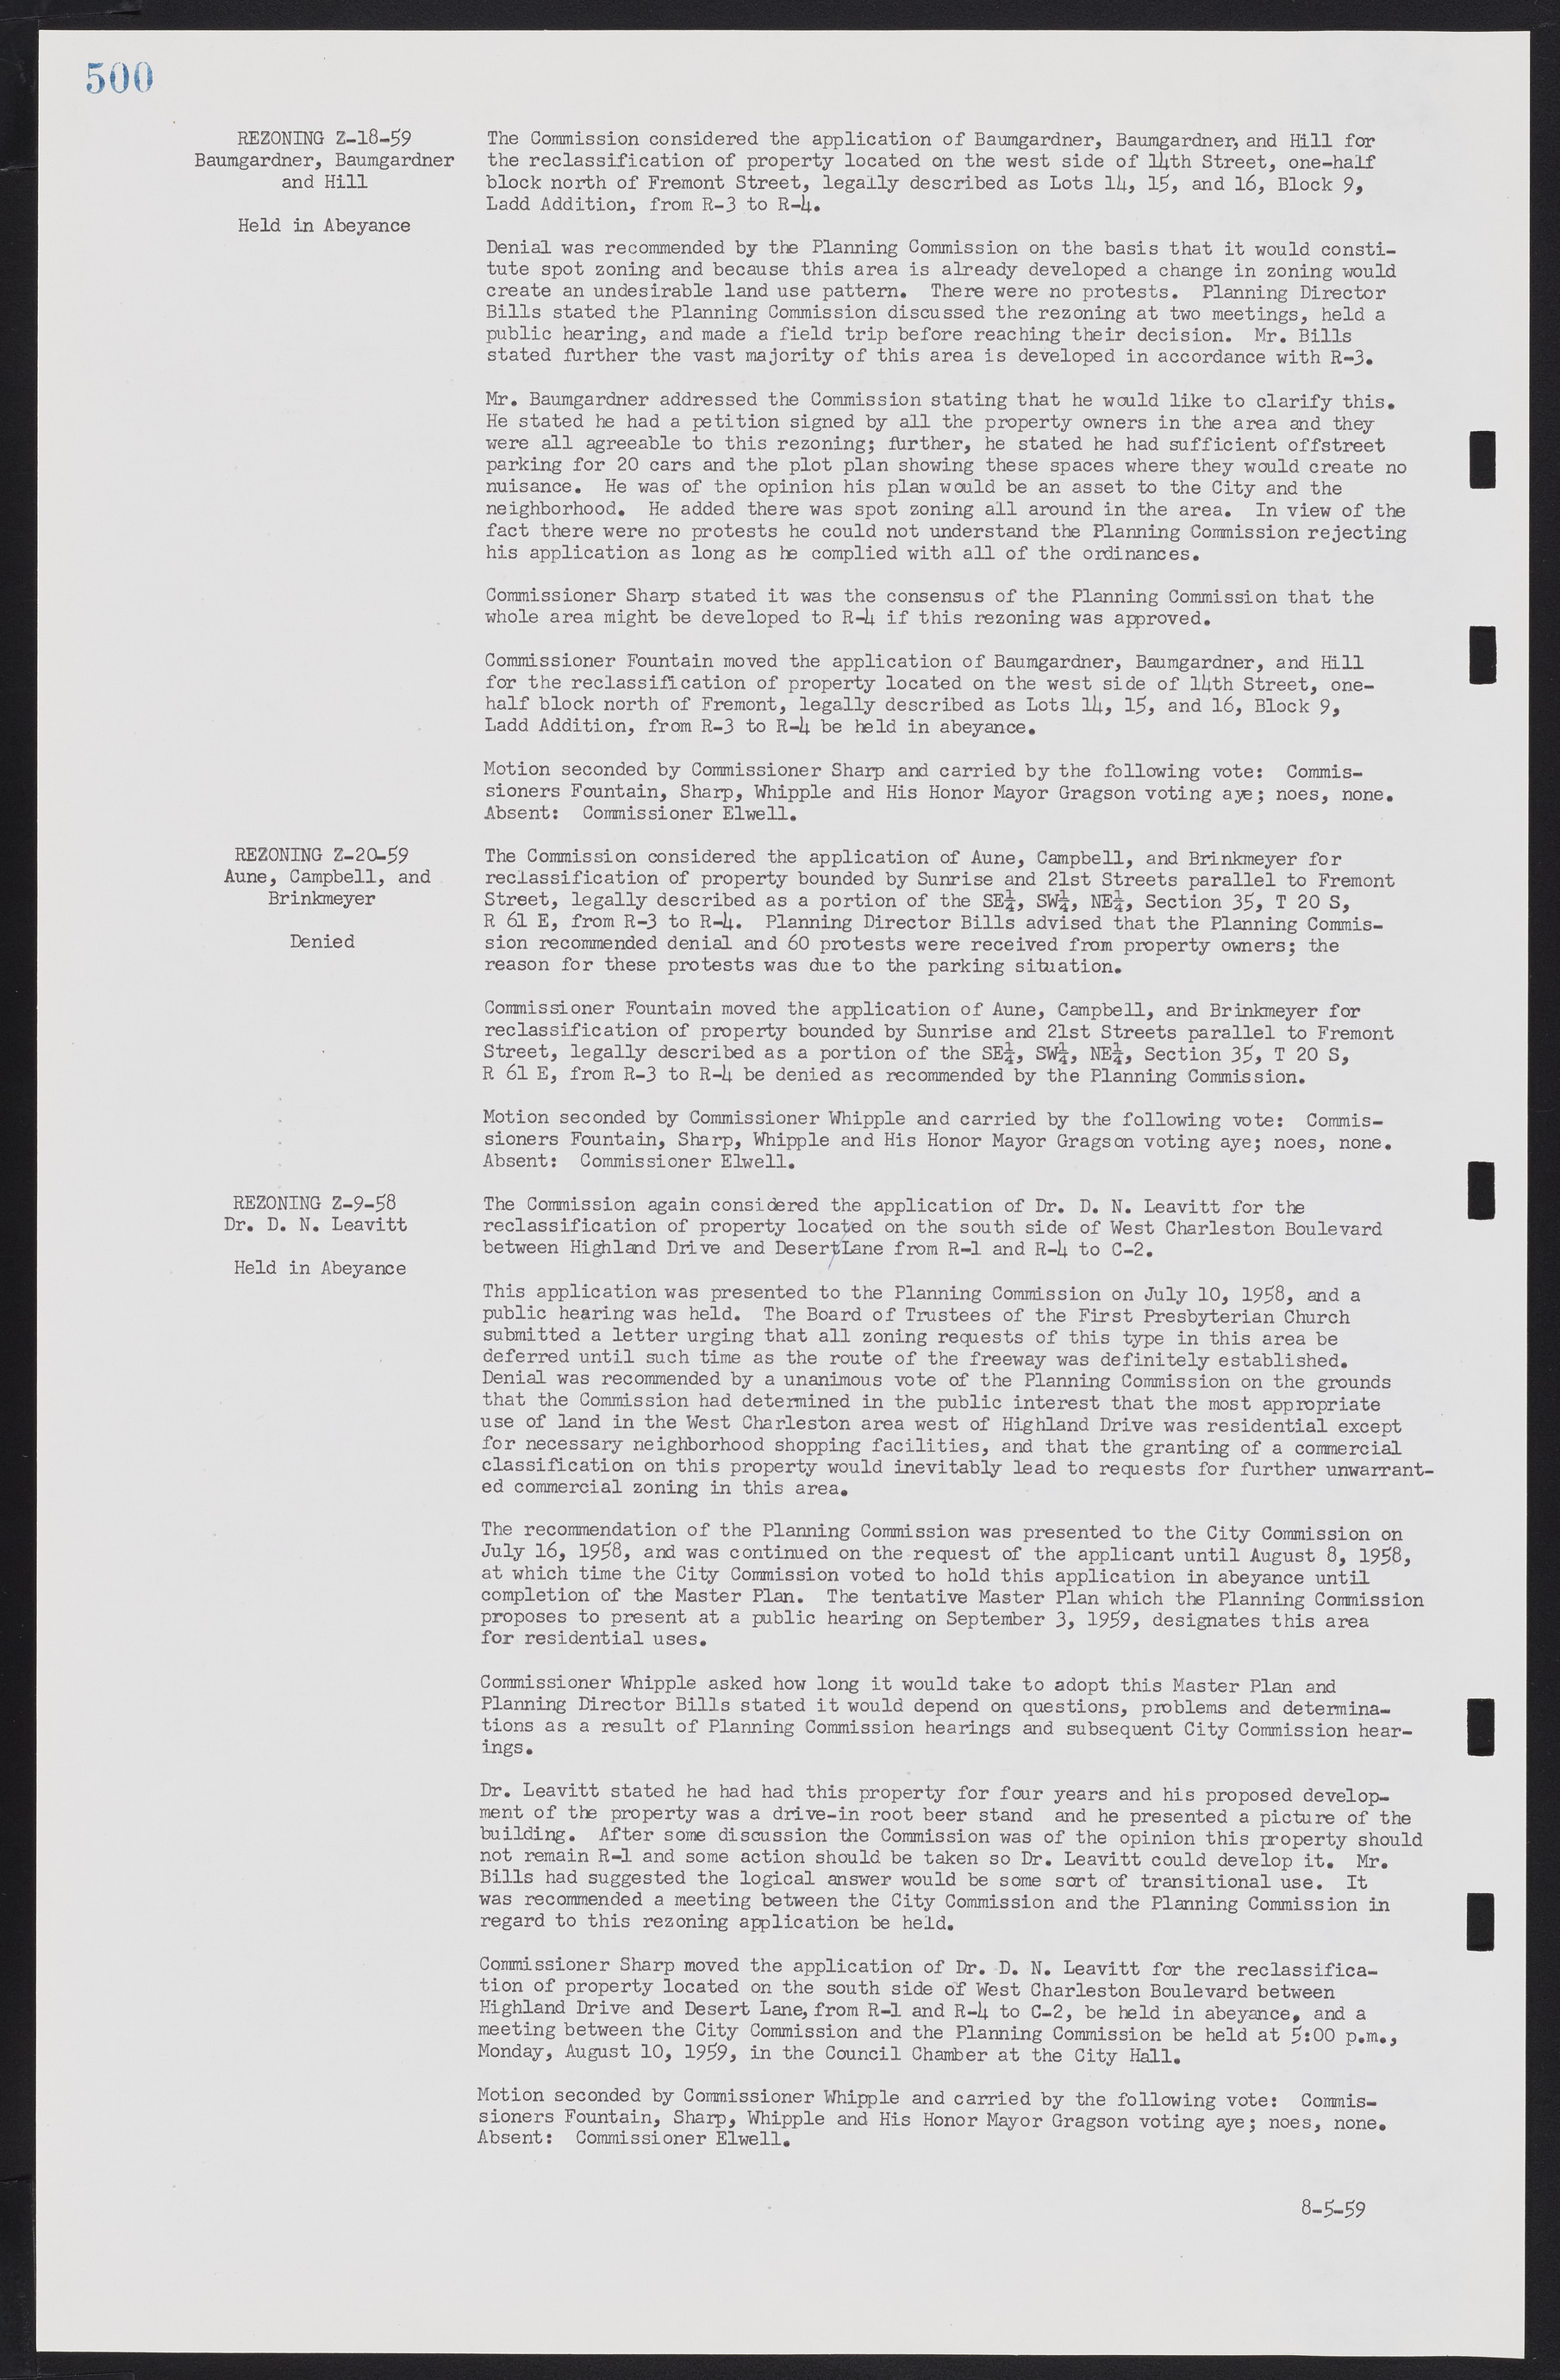 Las Vegas City Commission Minutes, November 20, 1957 to December 2, 1959, lvc000011-536